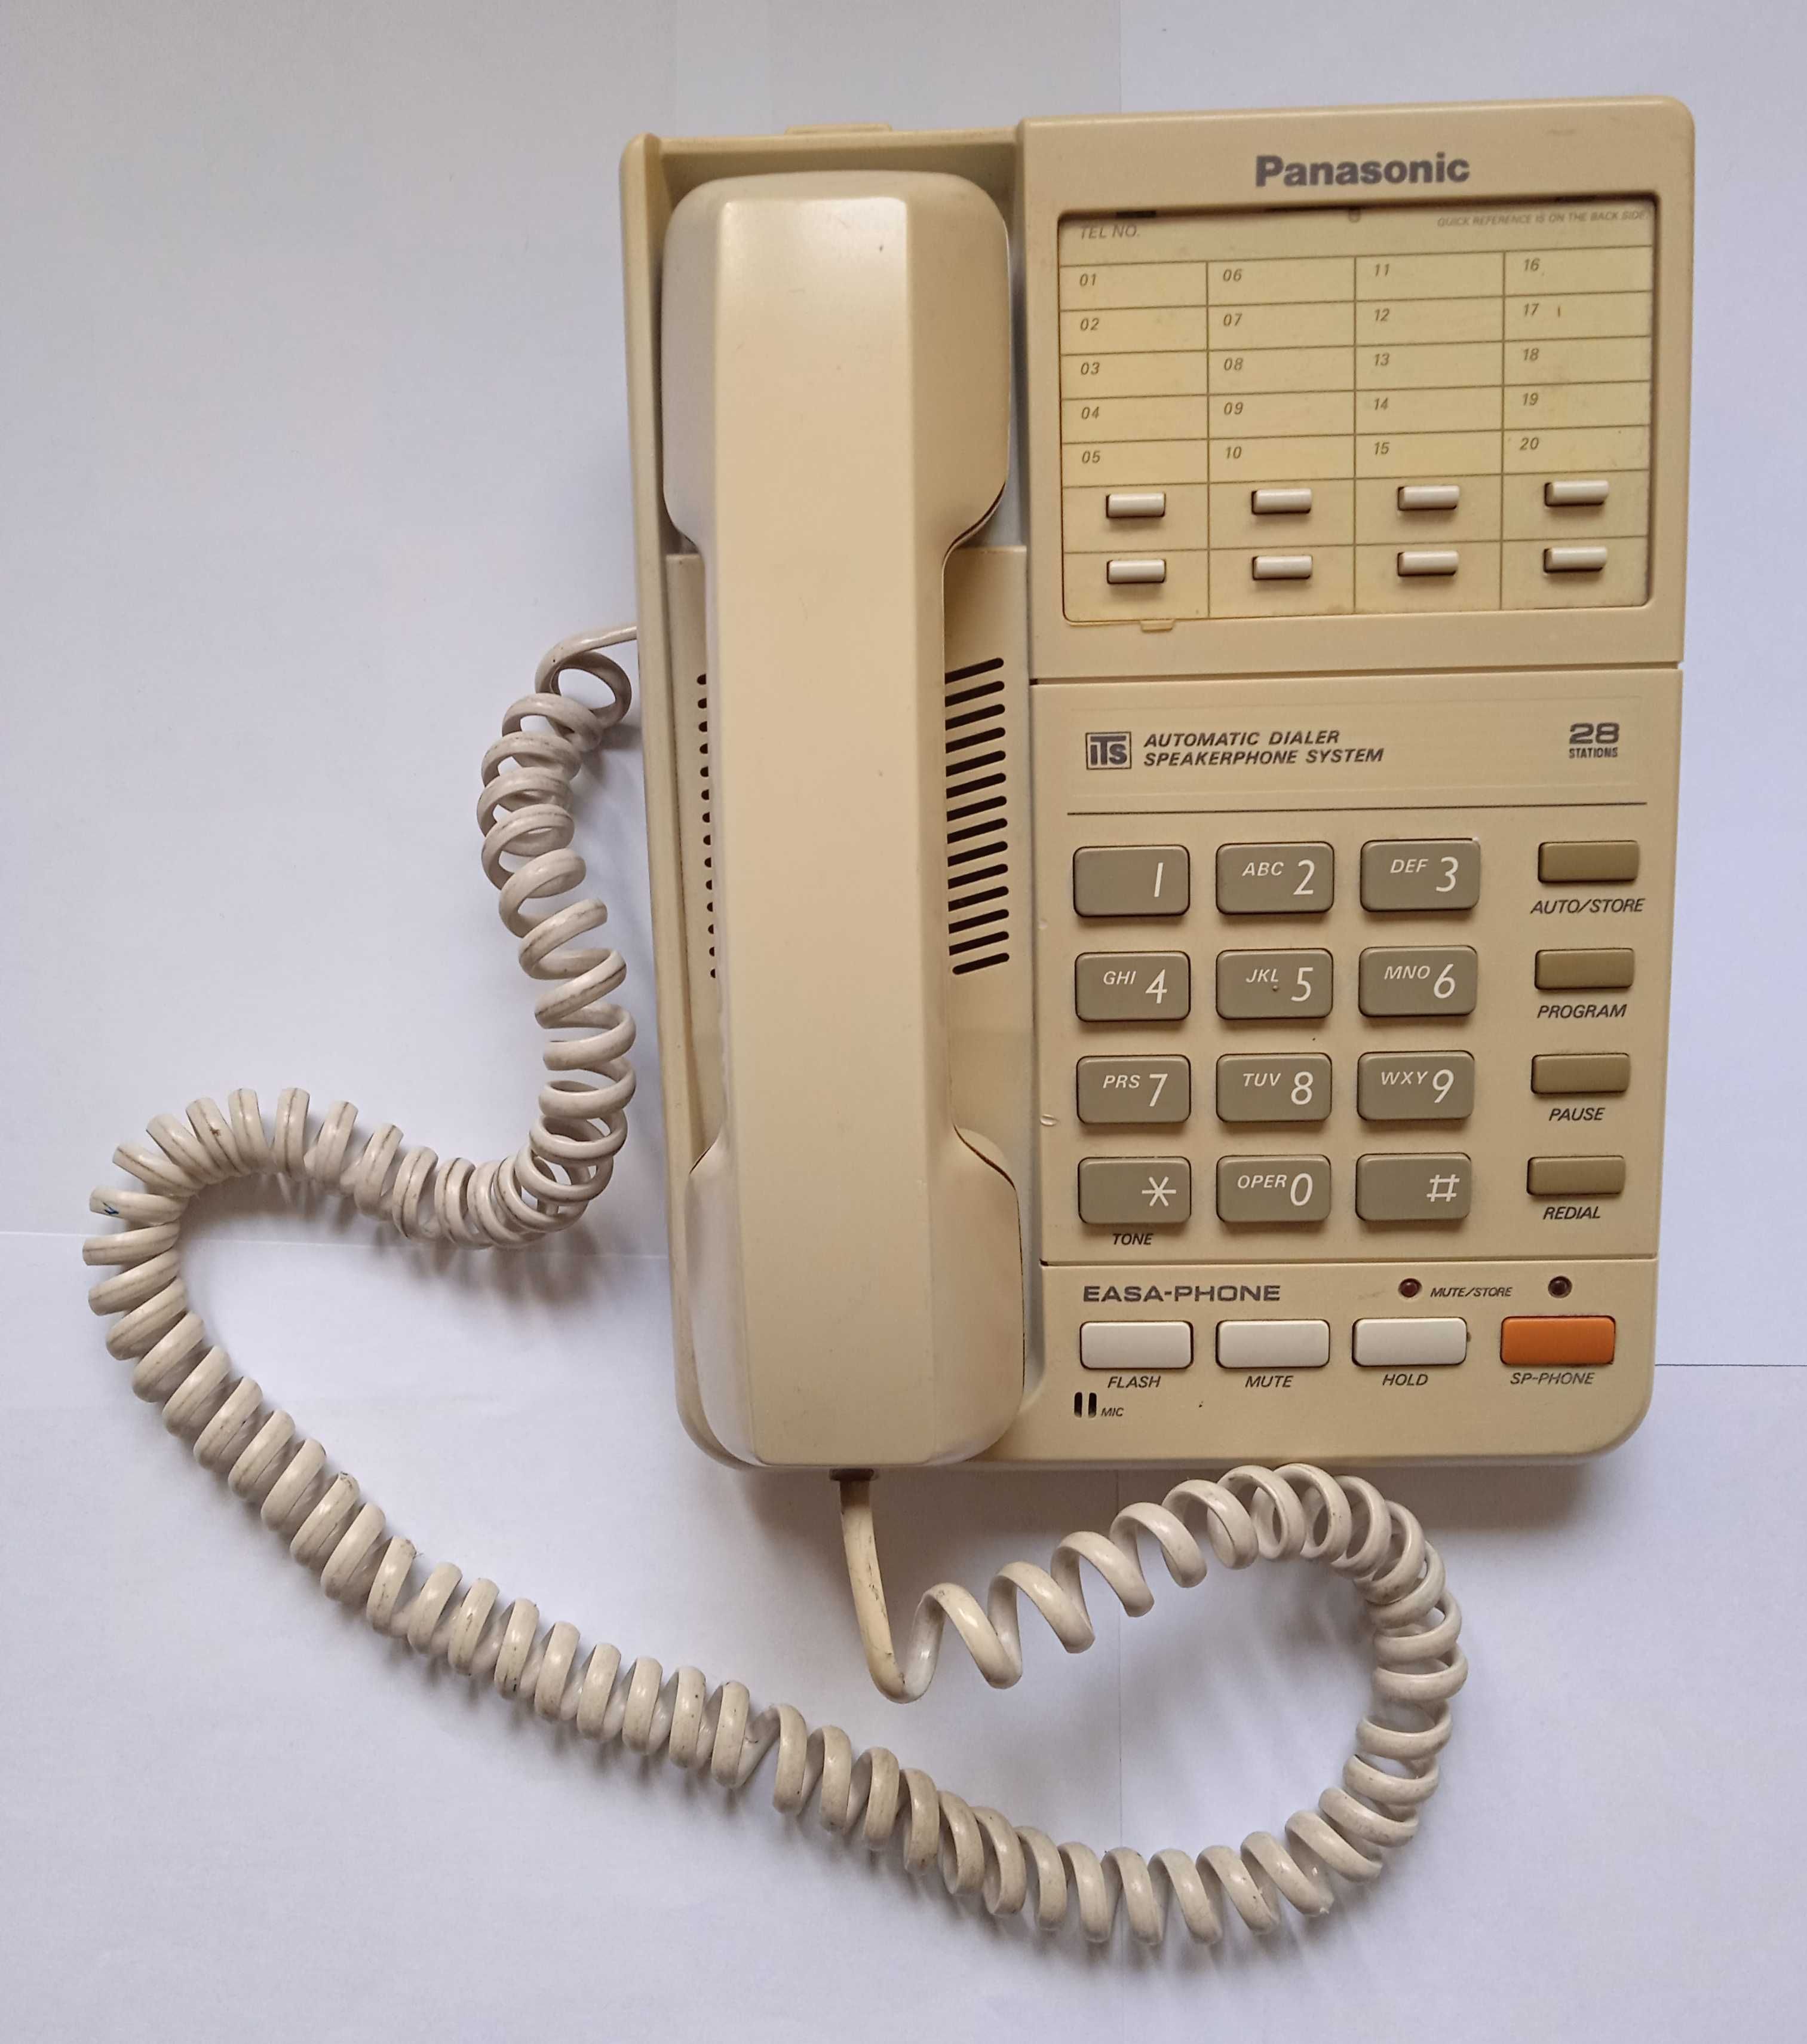 Telefon Panasonic EASA-PHONE KX-T2315